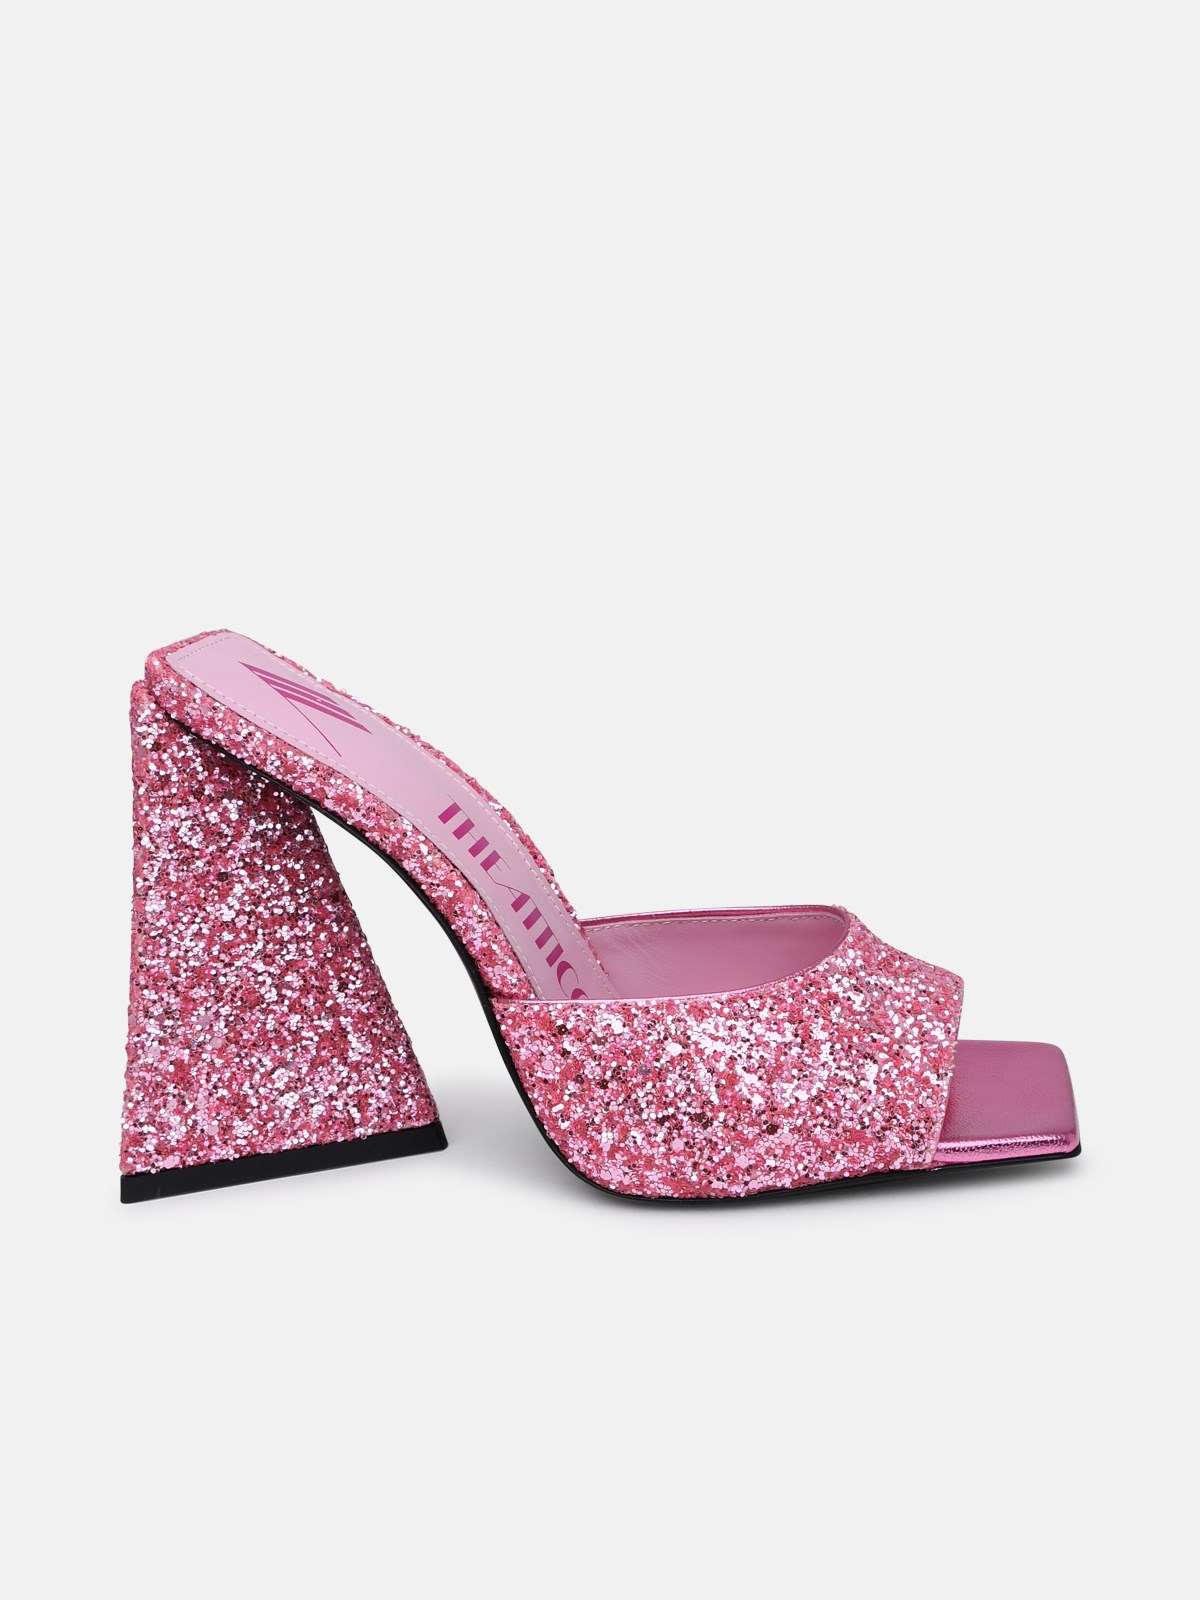 Attico Devon Sandal In Pink Polyethylene-terephthalate Blend